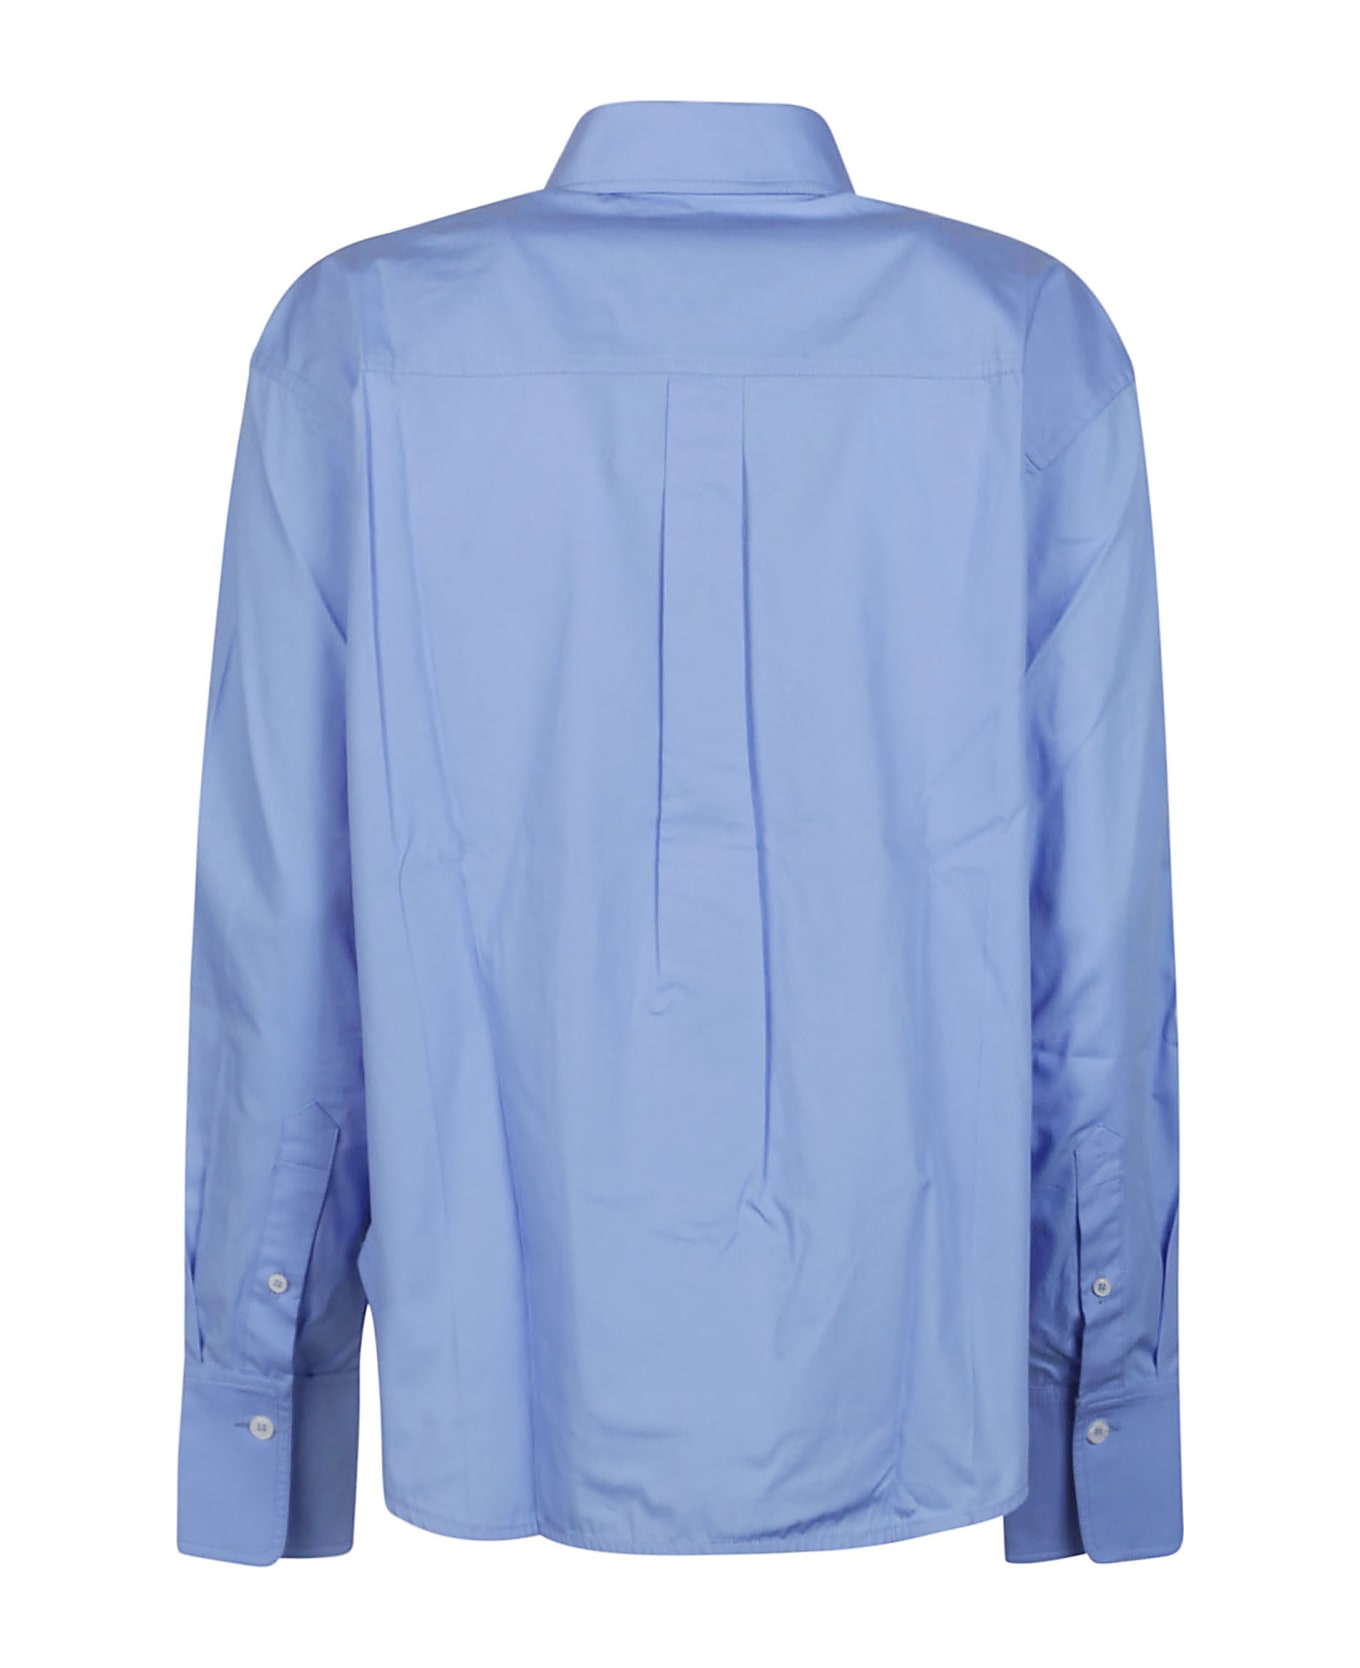 Victoria Beckham Cropped Long Sleeve Shirt - Oxford Blue